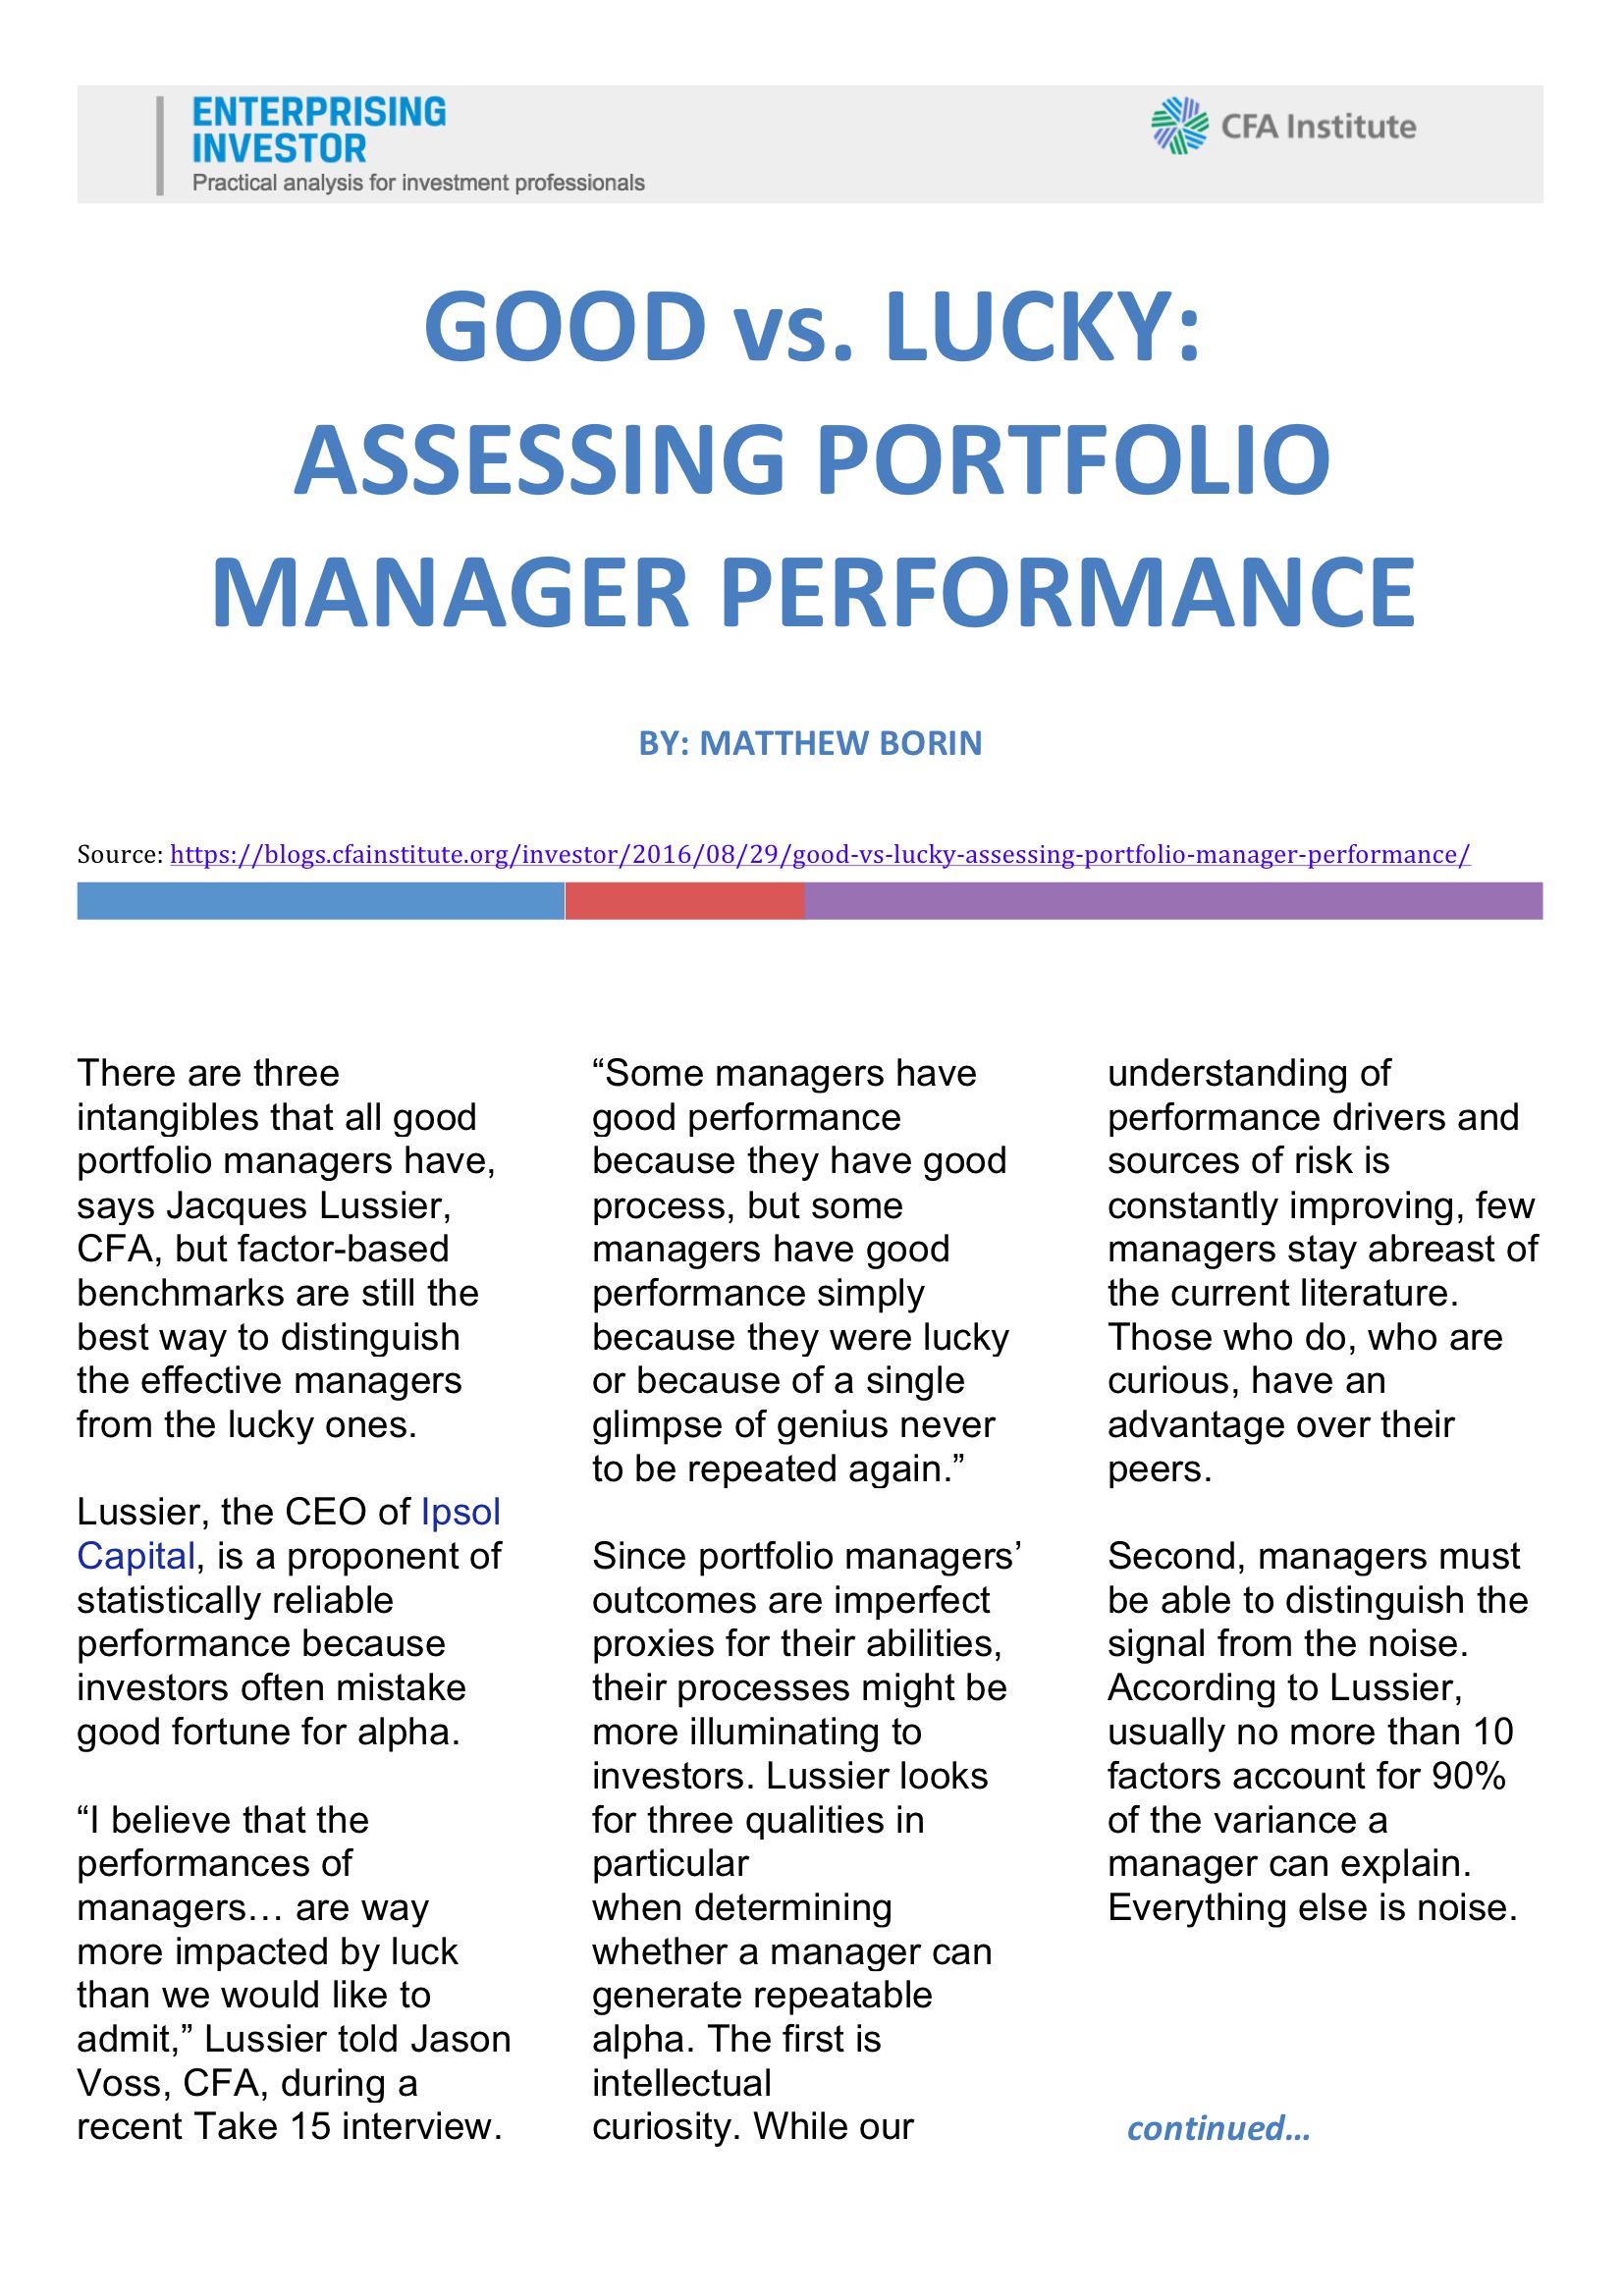 Good vs Lucky: Assessing Portfolio Manager Performance